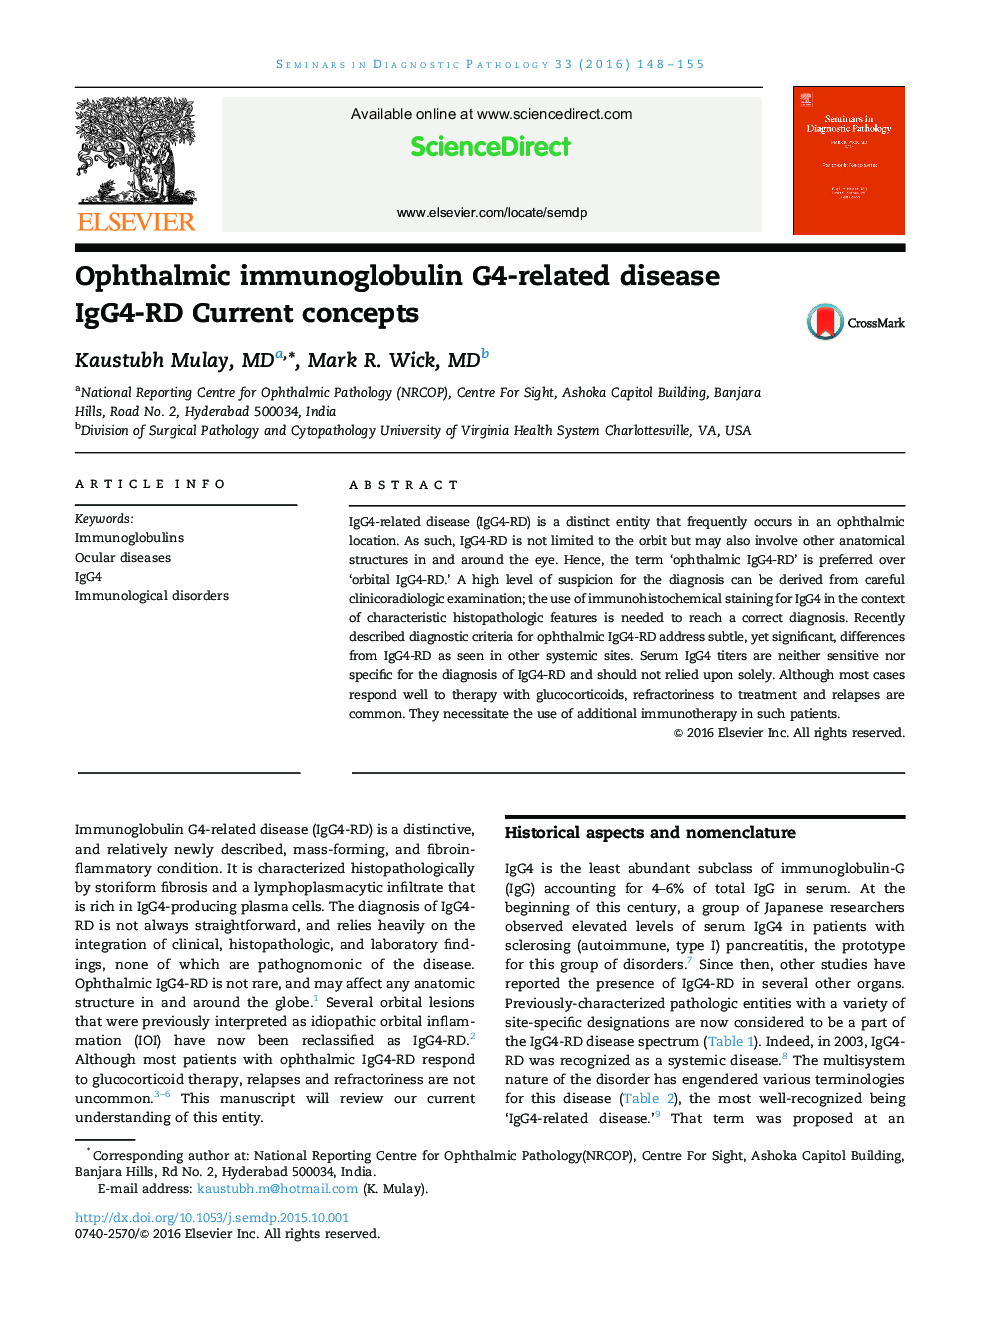 Ophthalmic immunoglobulin G4-related disease IgG4-RD Current concepts